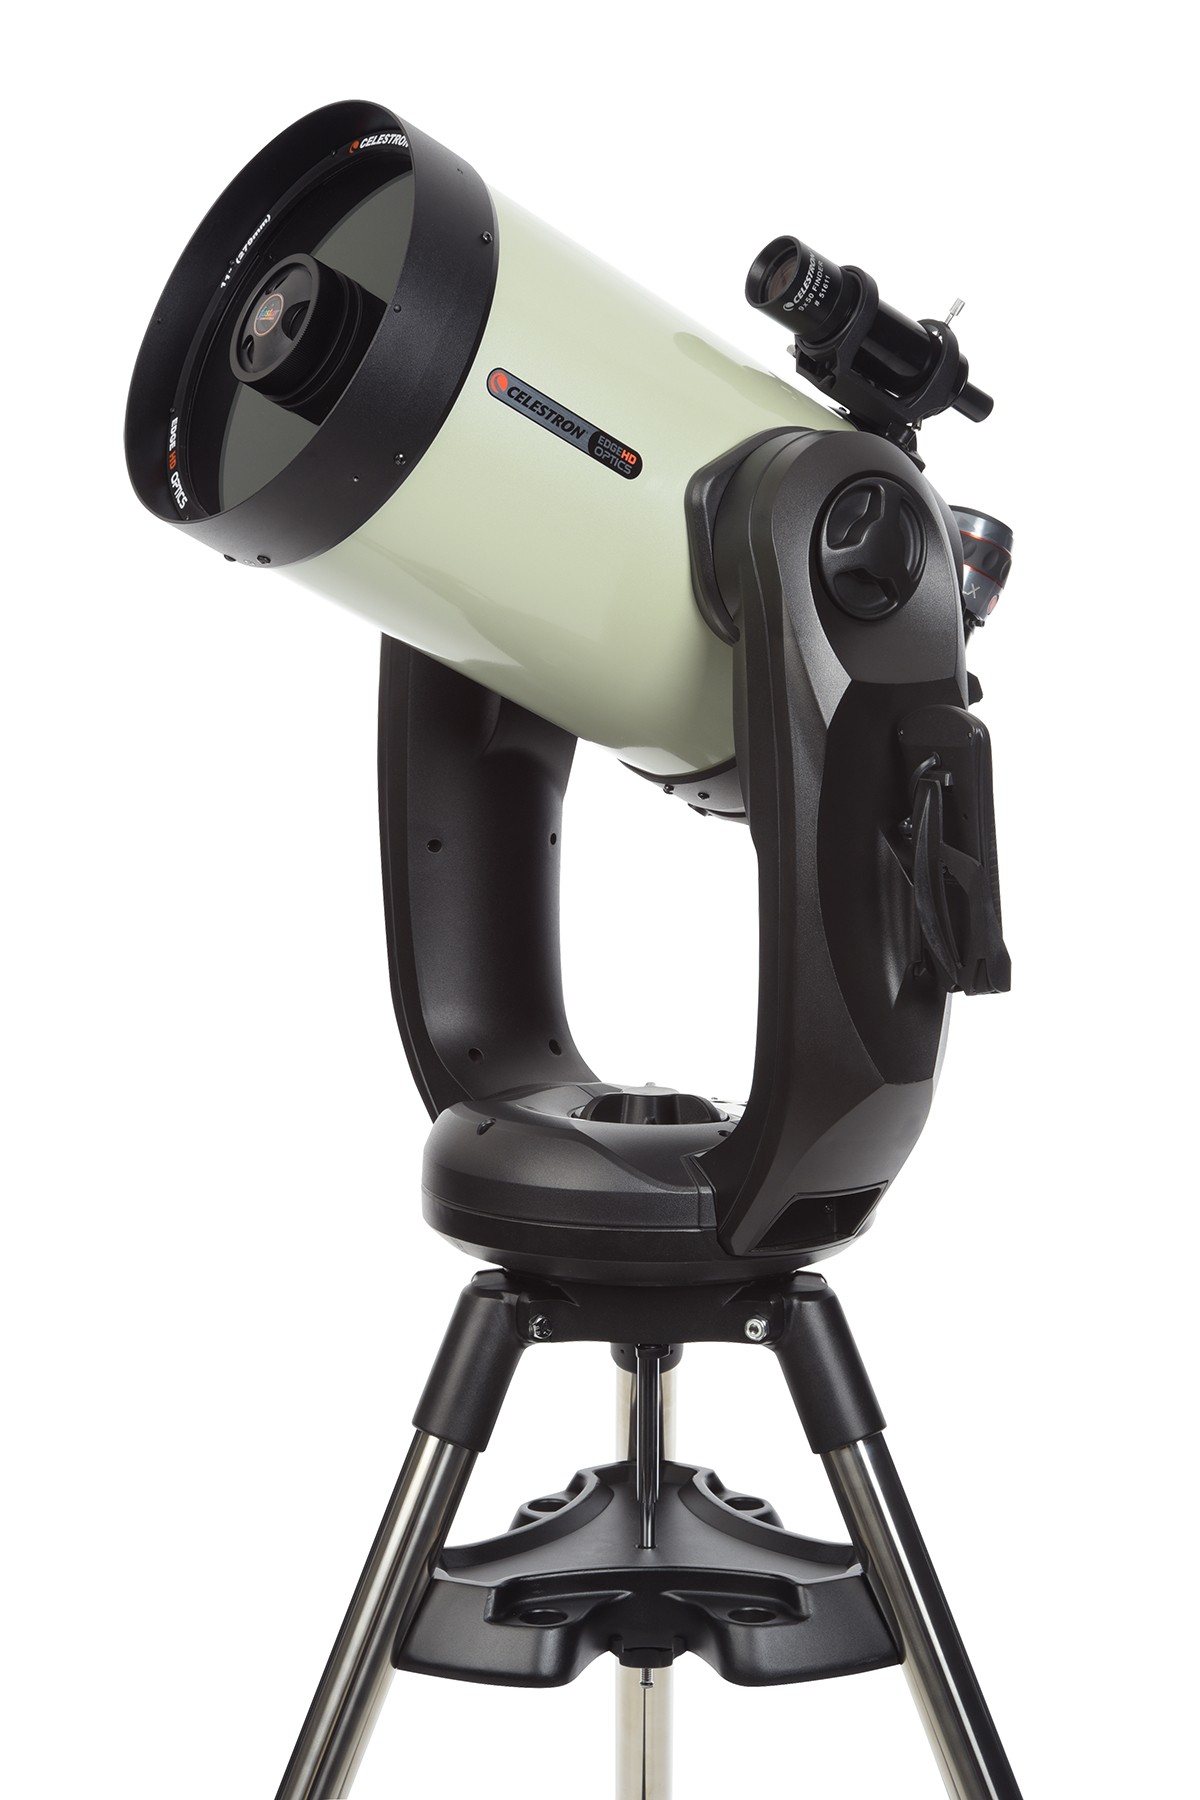 CPC Deluxe 1100 HD Goto-Teleskop